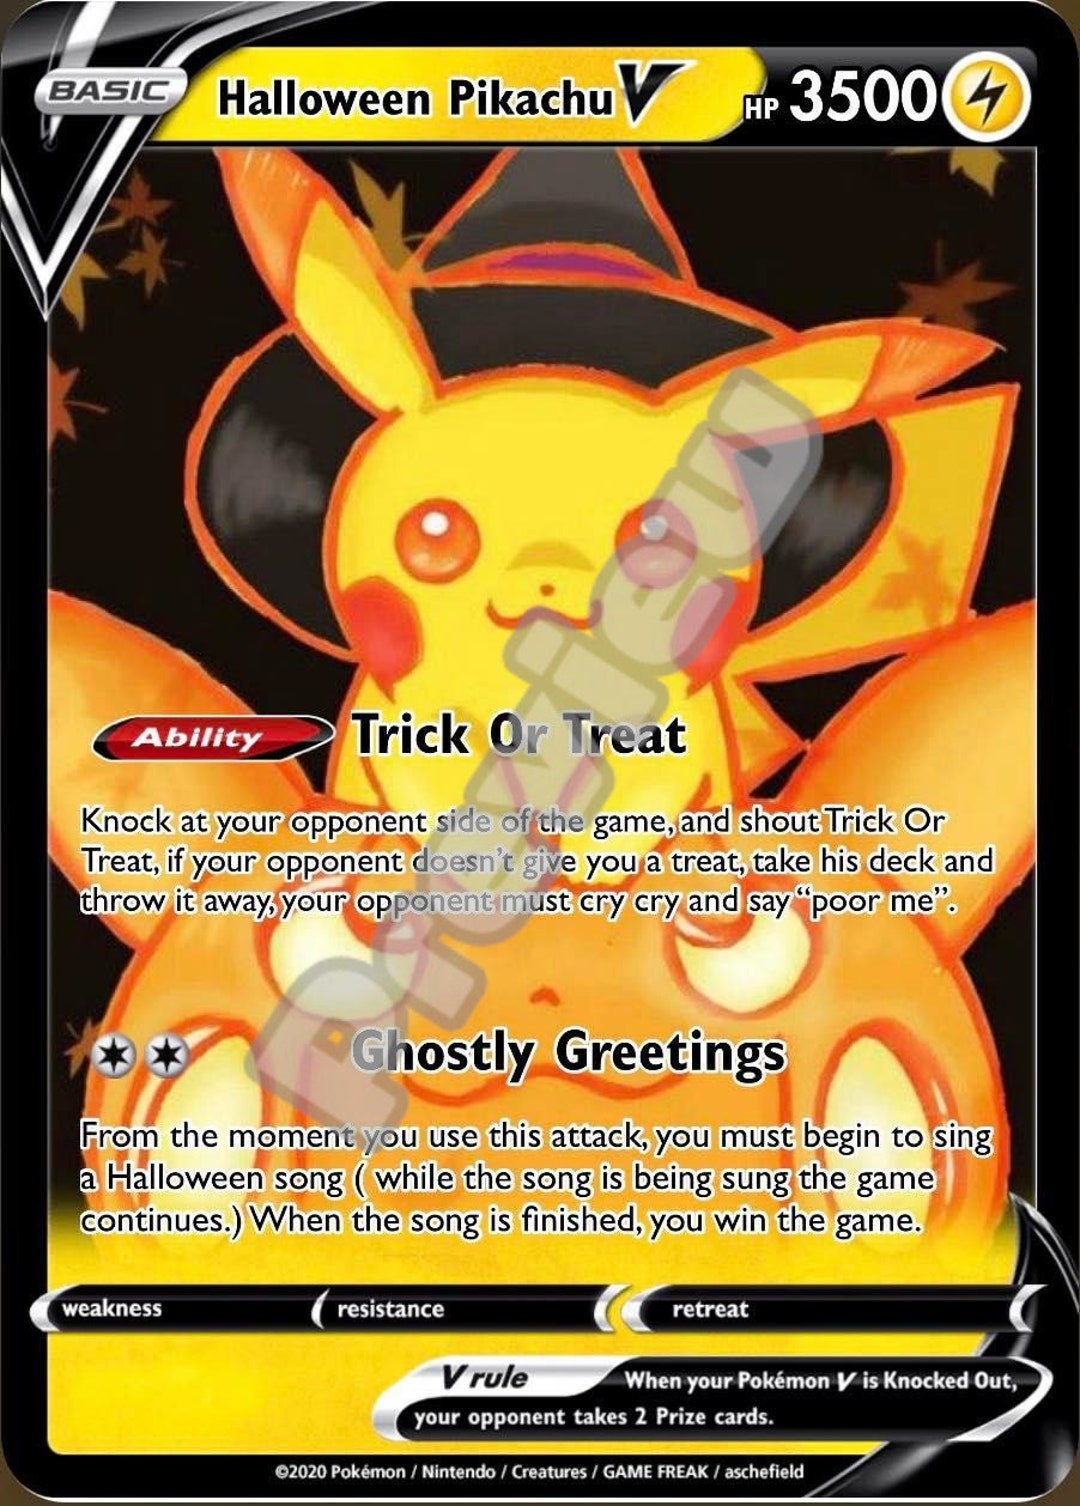 Bolsa de Tiracolo para Telemóvel Pokémon PIKACHU Preta